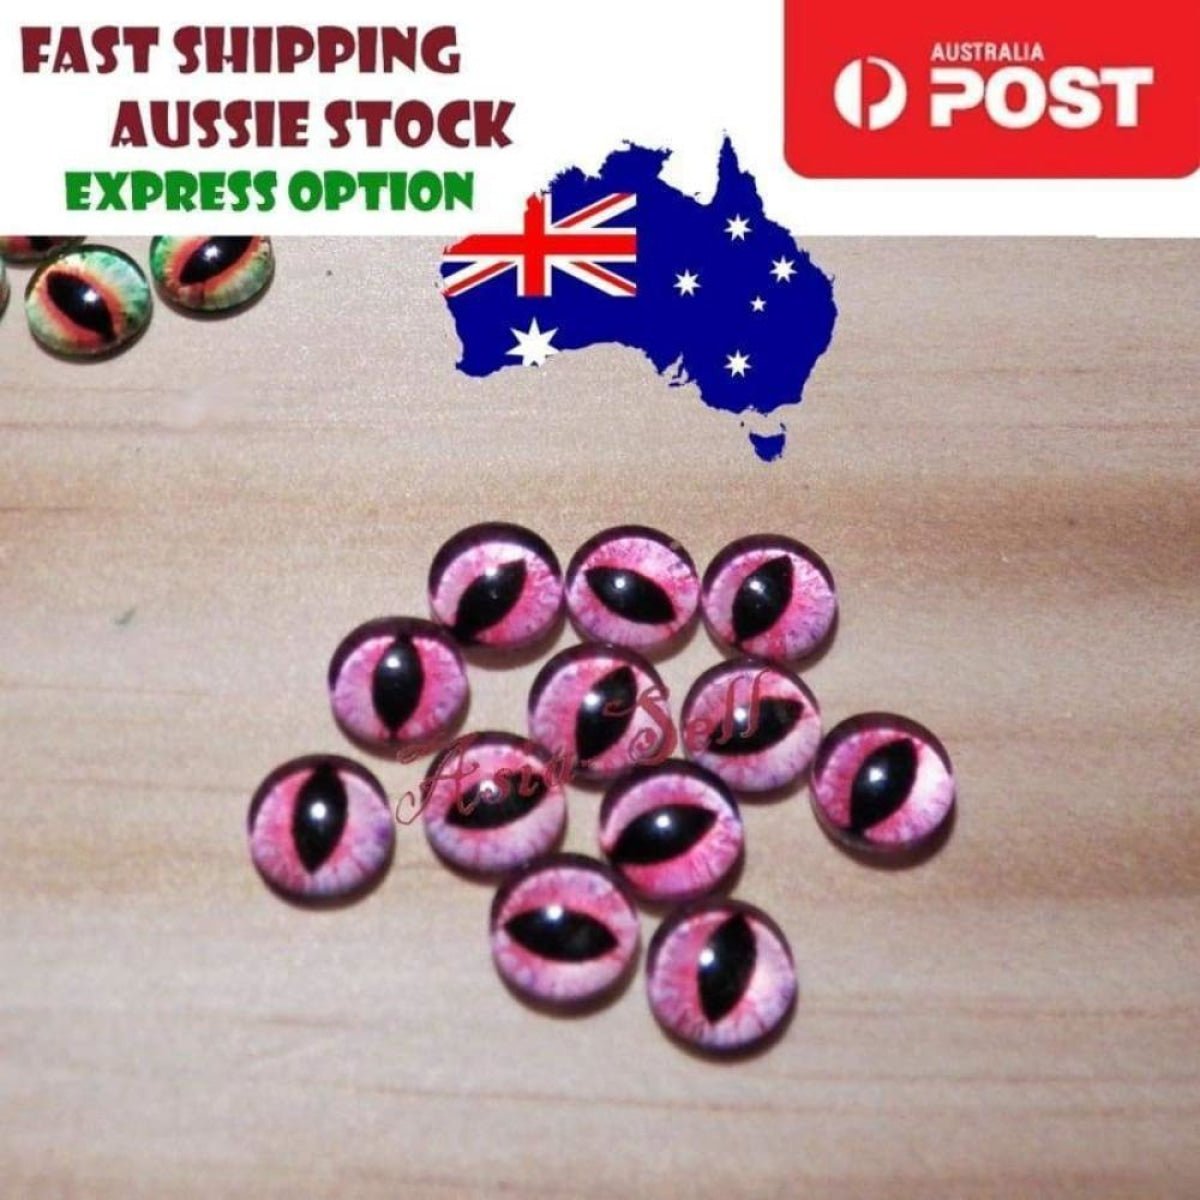 10pcs Round 20mm Glass Eyes Dragon Lizard Frog Eyeballs - Mixed Set 1 - - Asia Sell